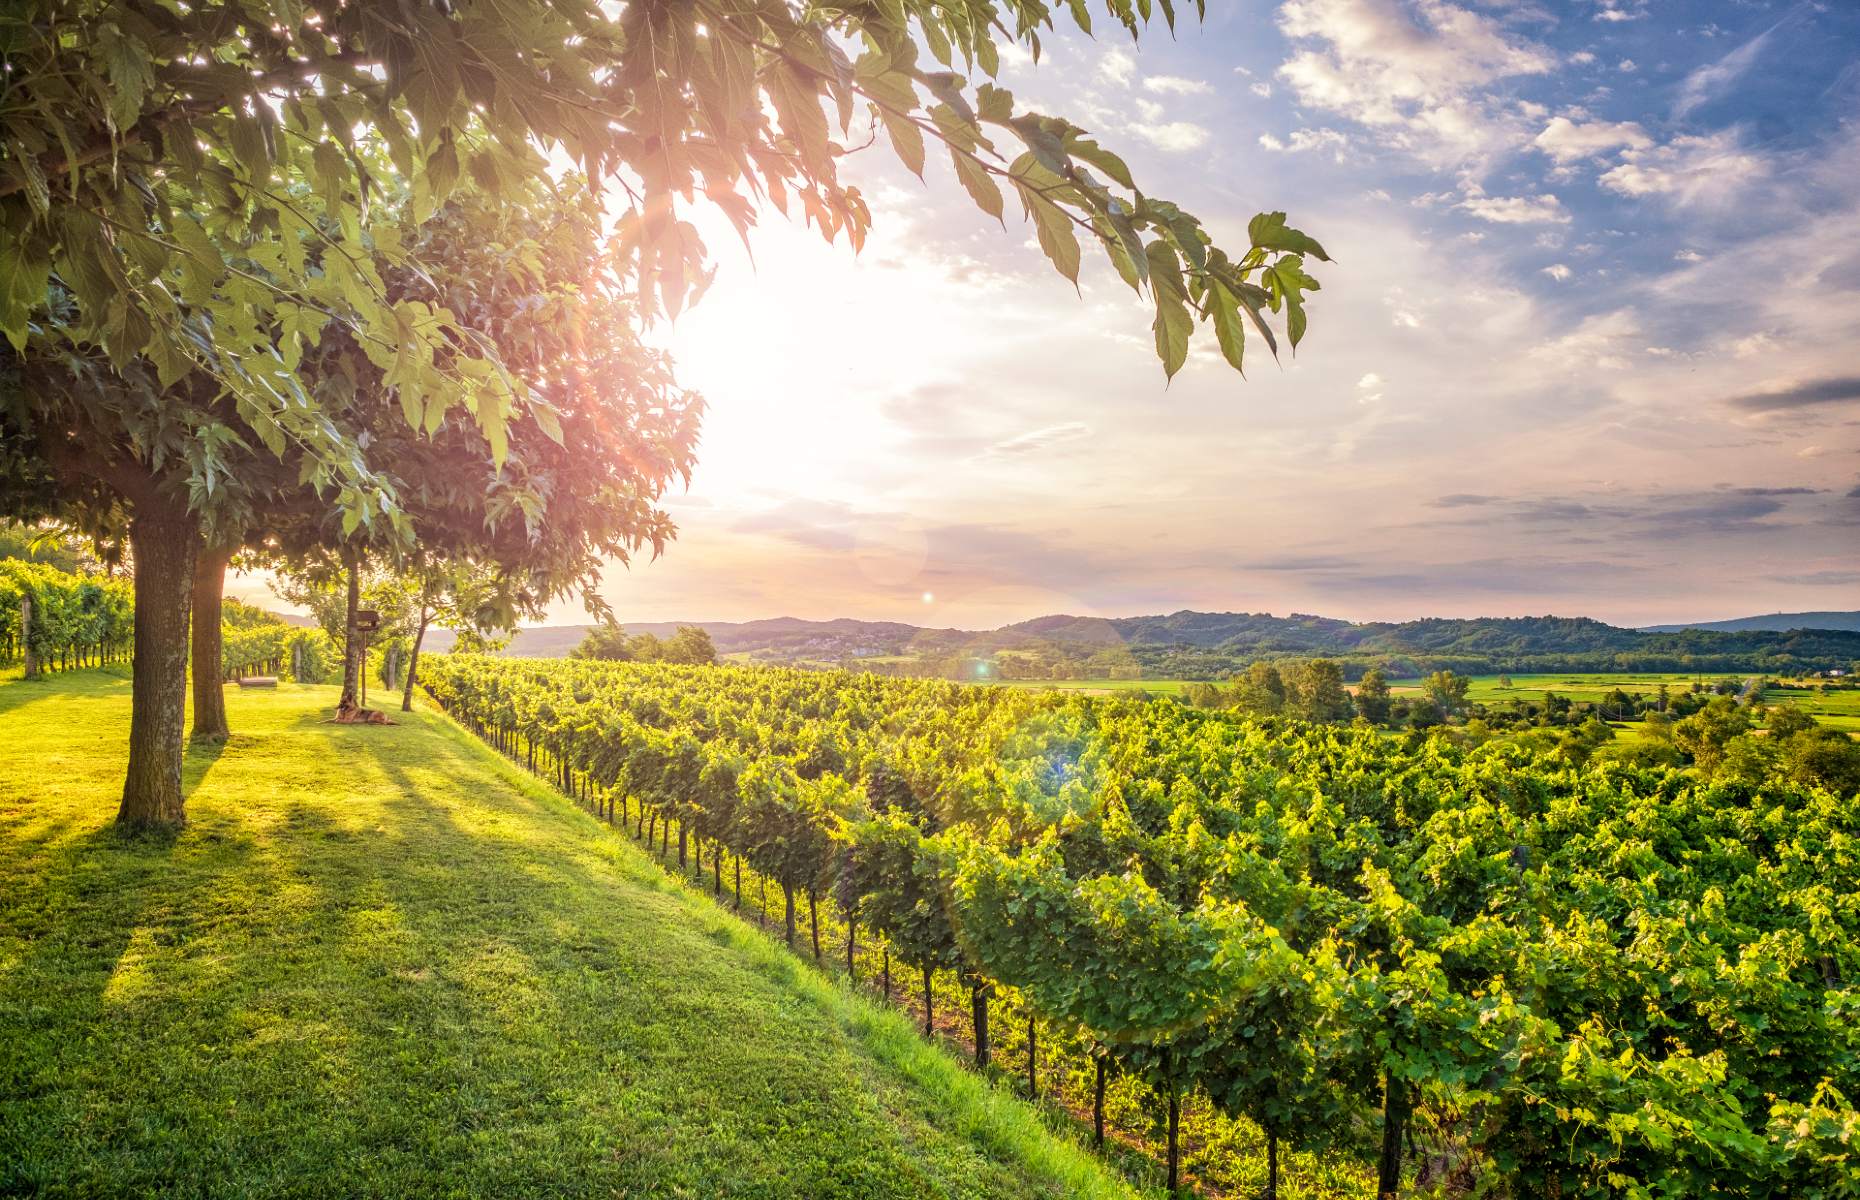 Vivpava valley vineyards (Image: Mny-Jhee/Shutterstock)